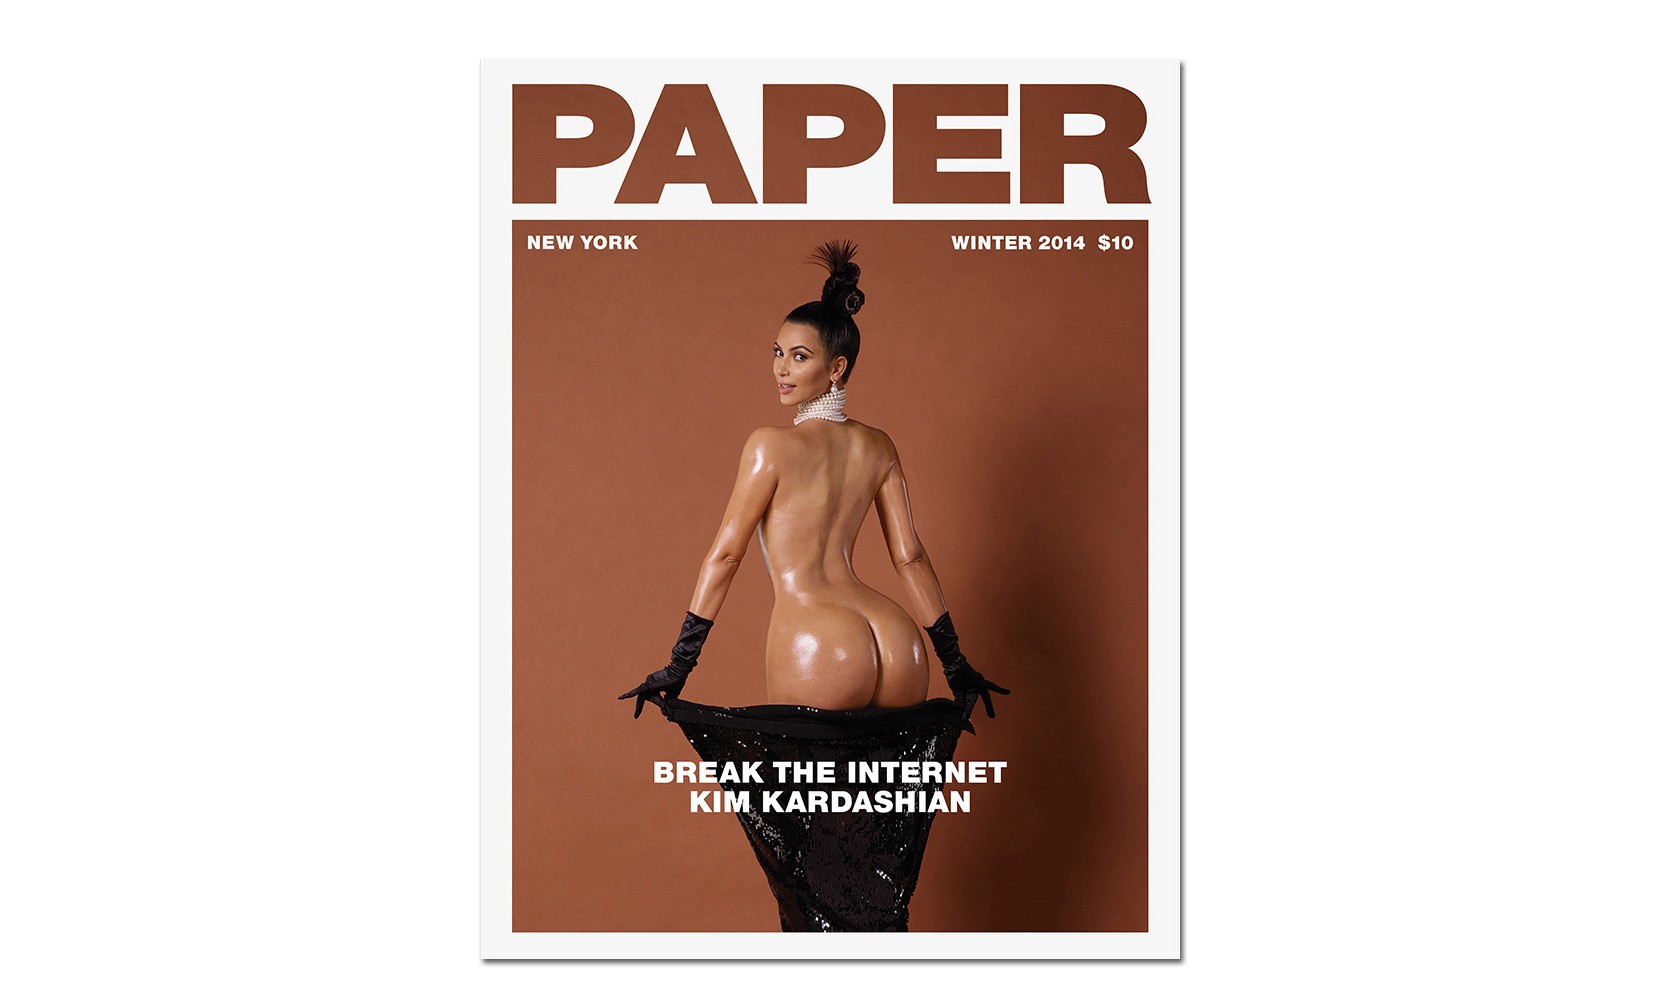 Kim Kardashian 为《PAPER》杂志全裸性感出镜